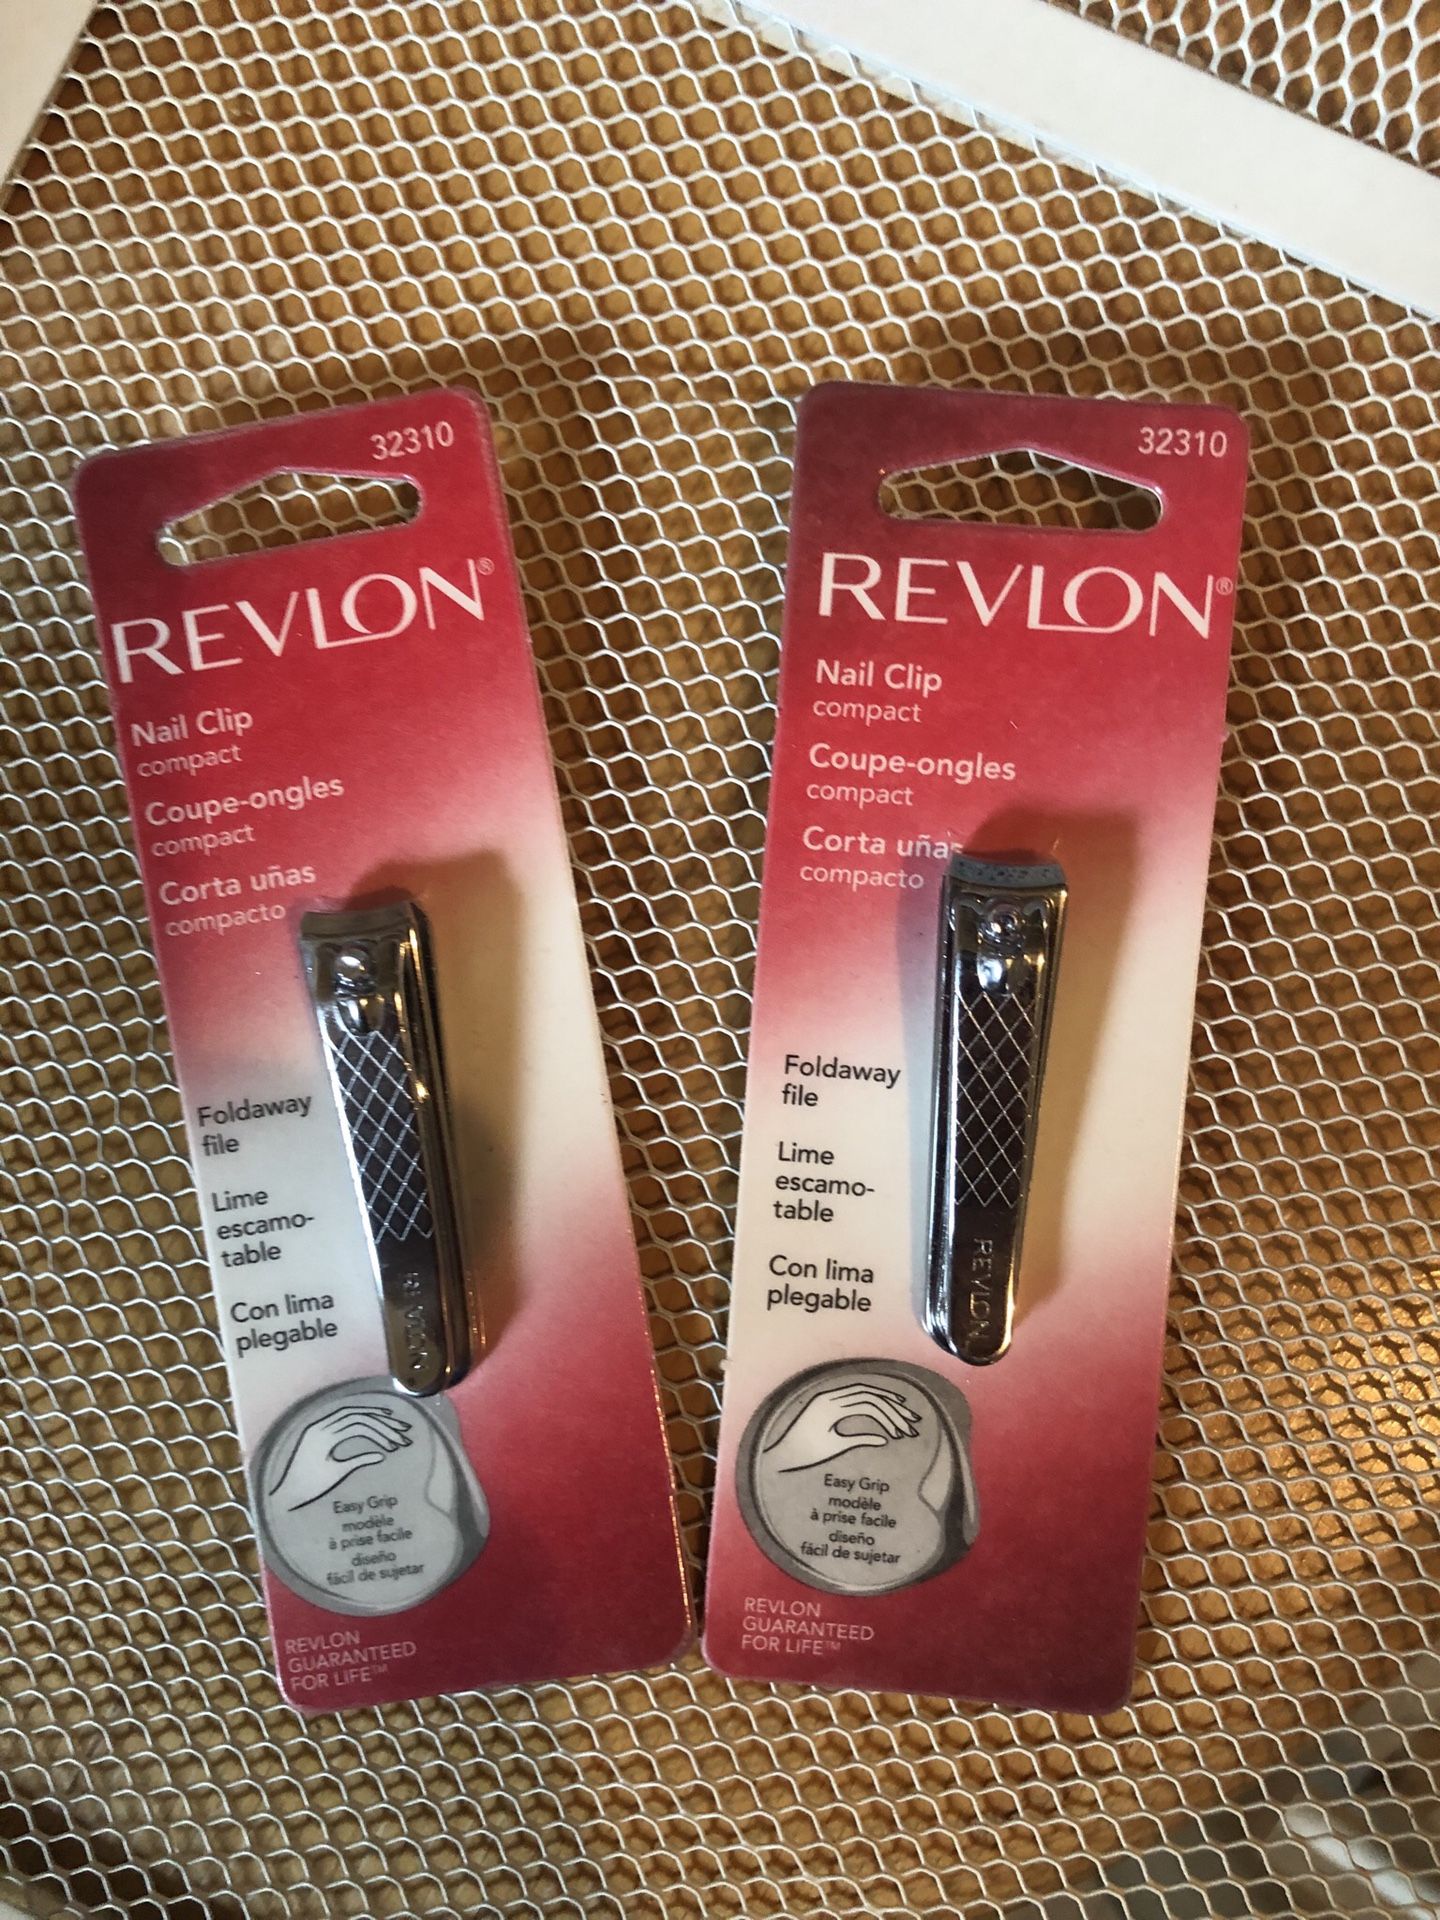 2 Revlon nail clippers